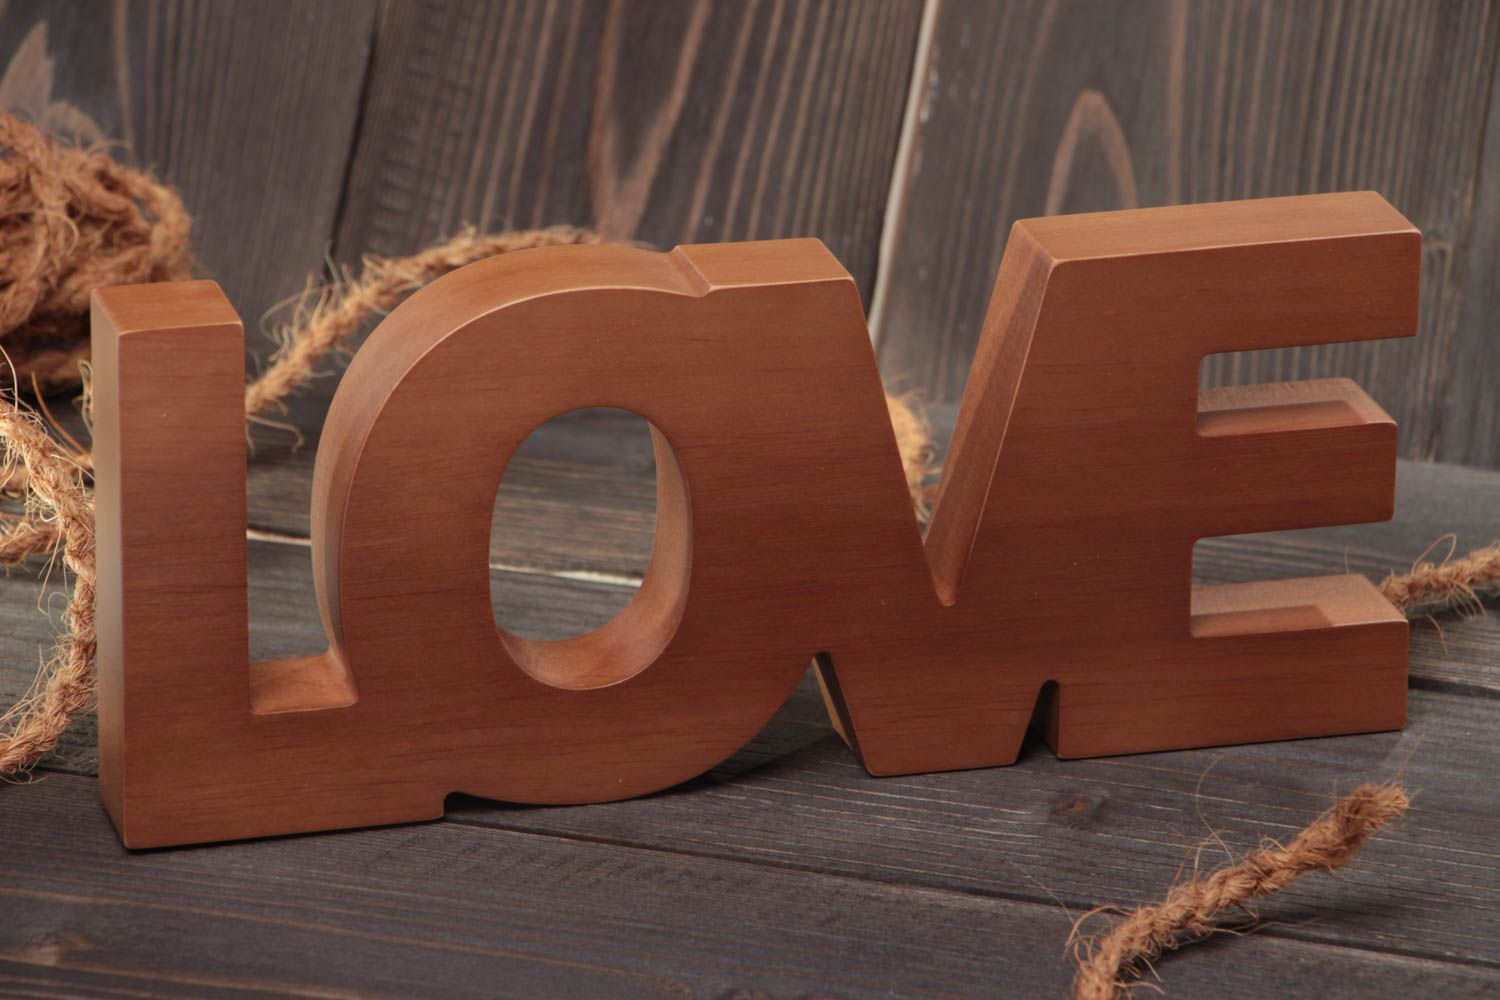 Palabra decorativa love de madera artesanal marrón romántica para decorar casa  foto 1